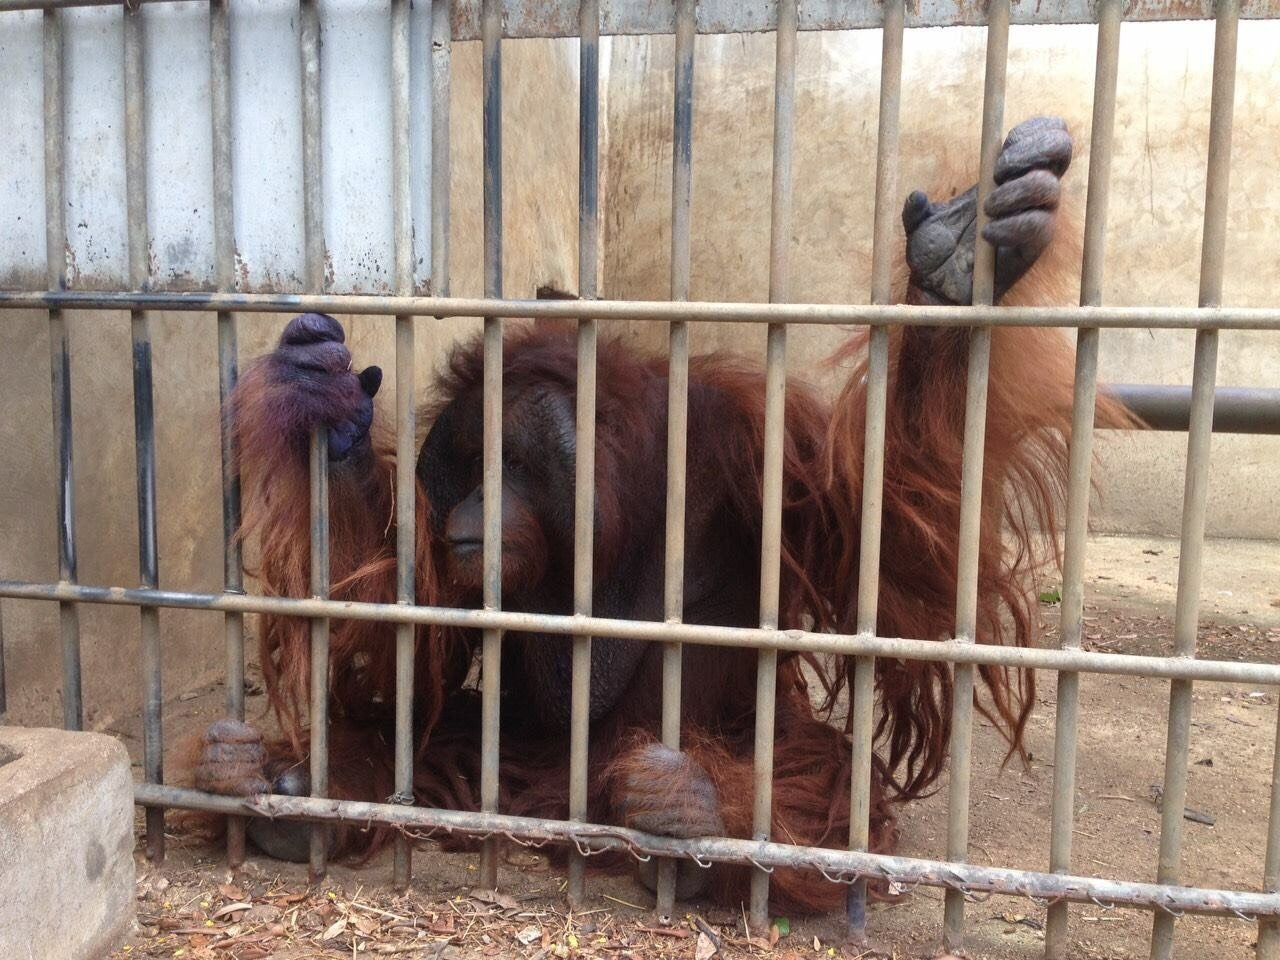 Press Release On 14 Orangutans To Be Repatriated